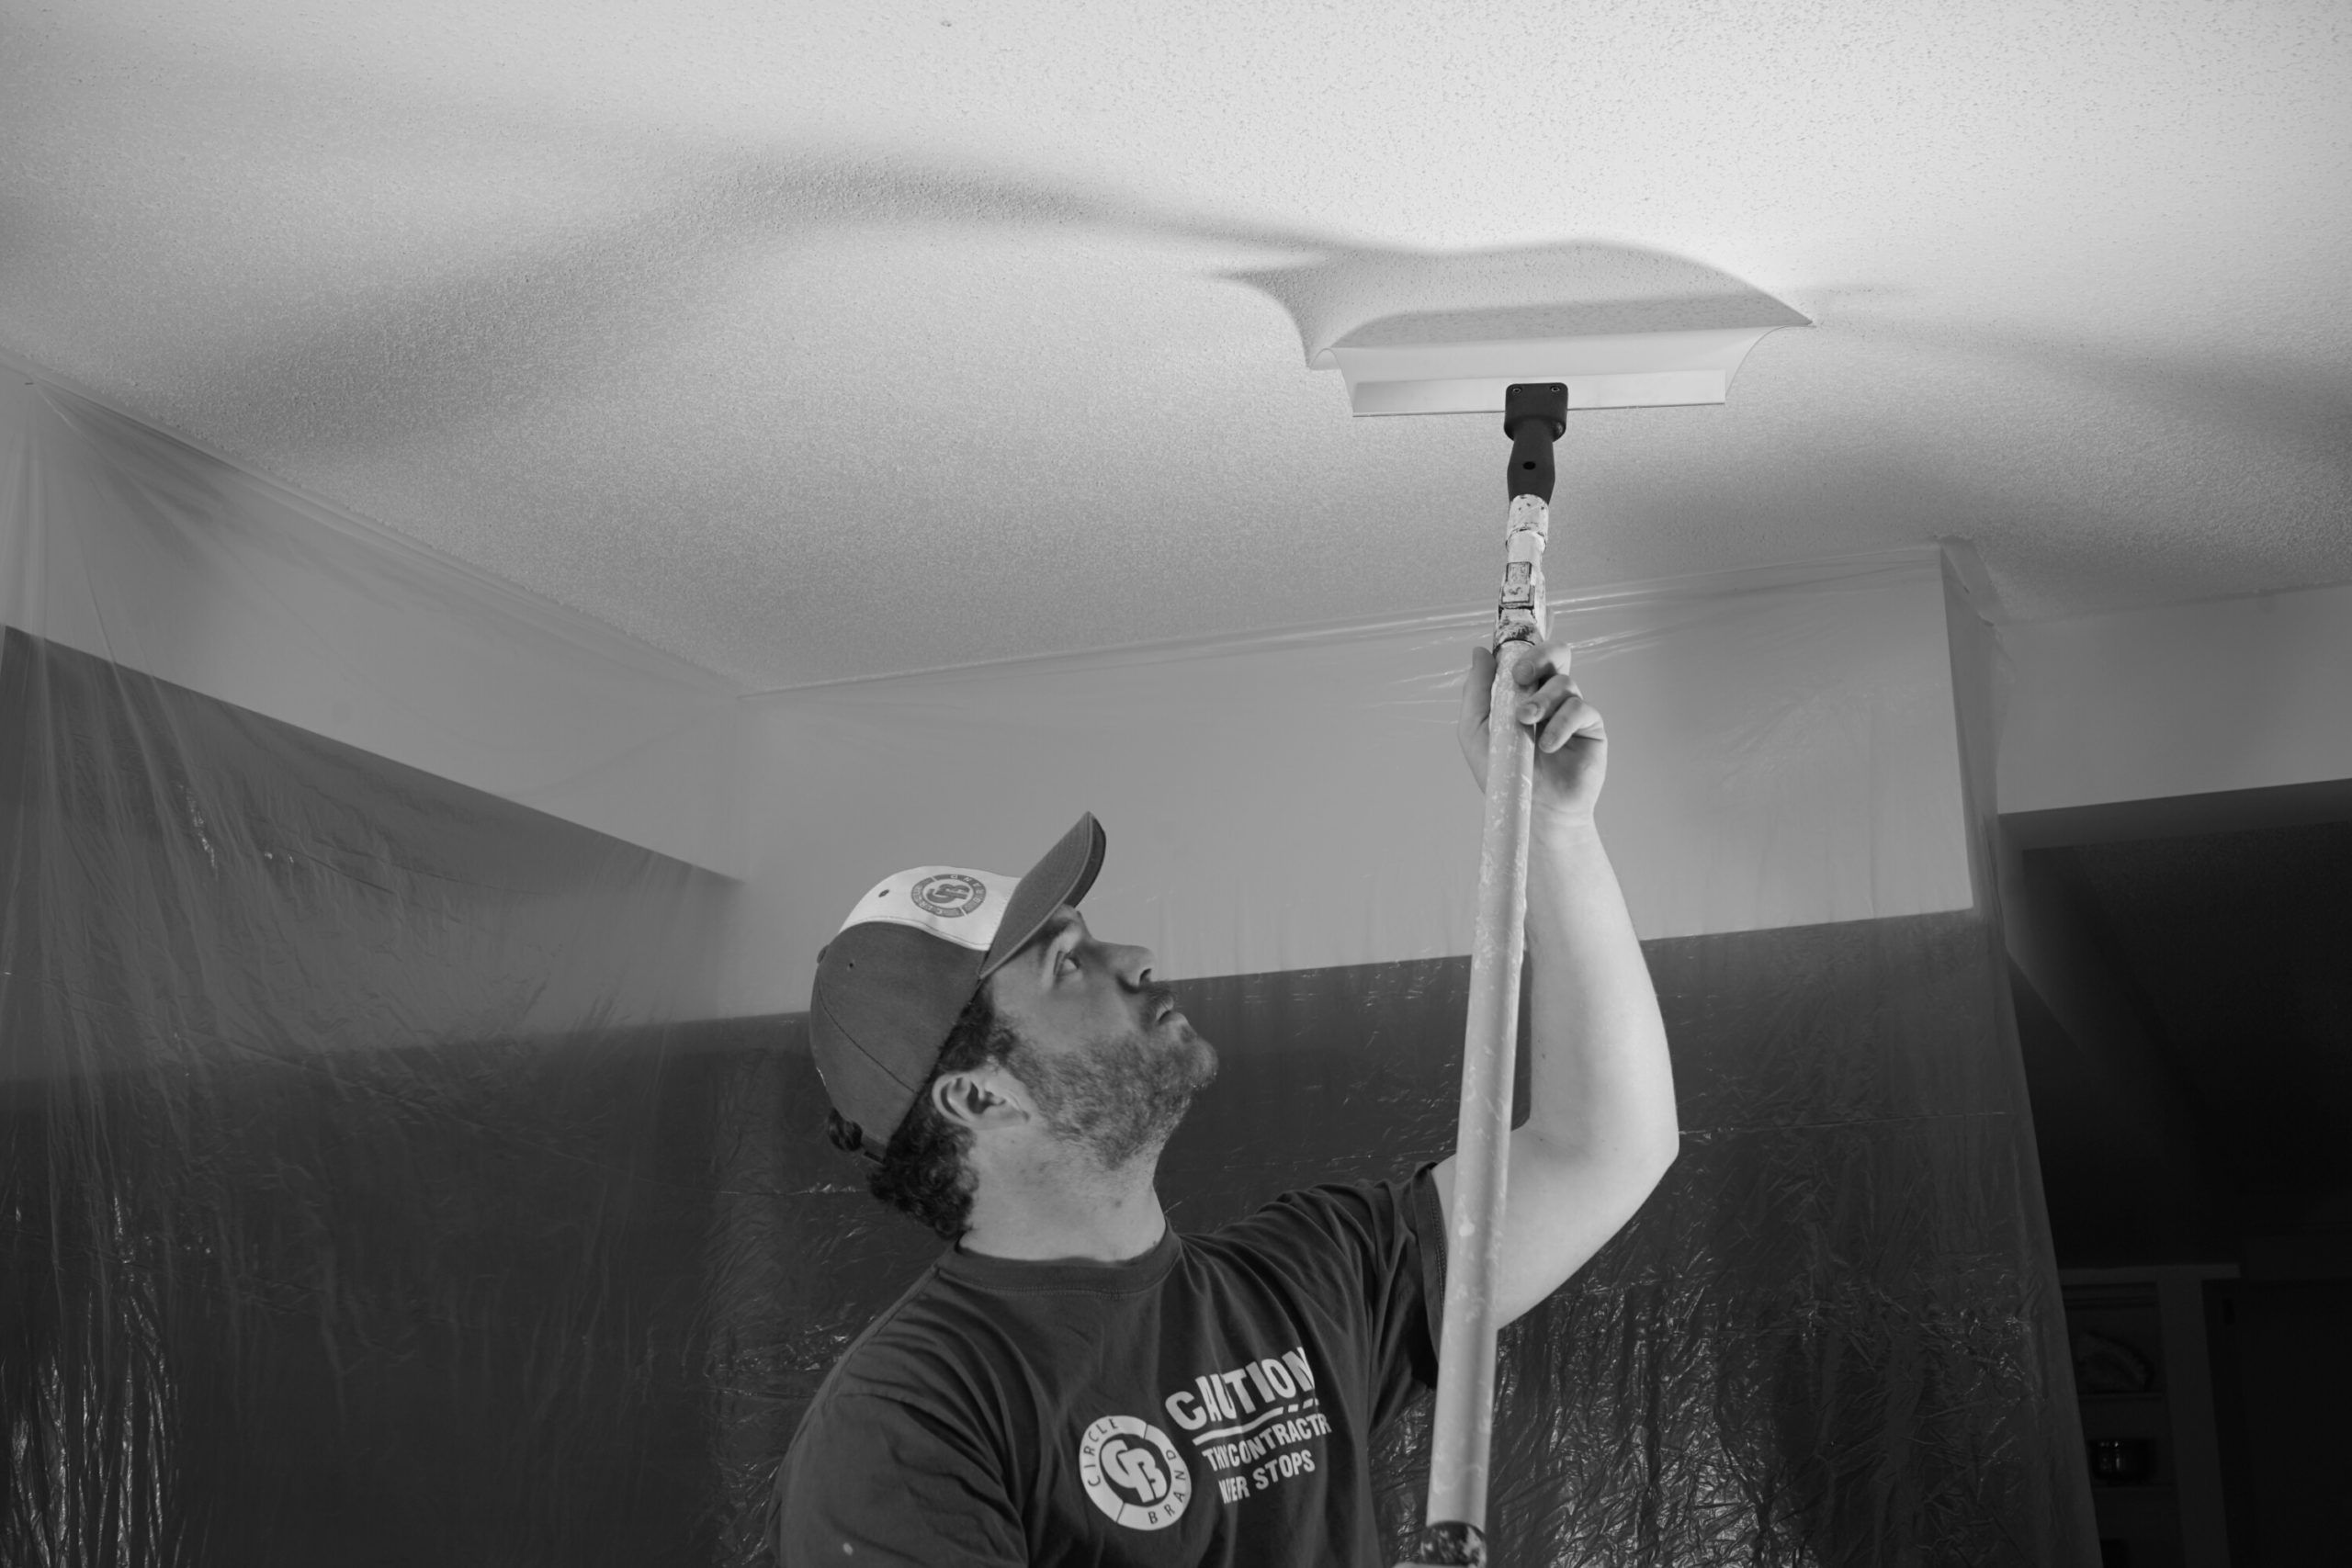 DIY Drywall Repair Sponge for Ceiling Texture - 3 Piece Set